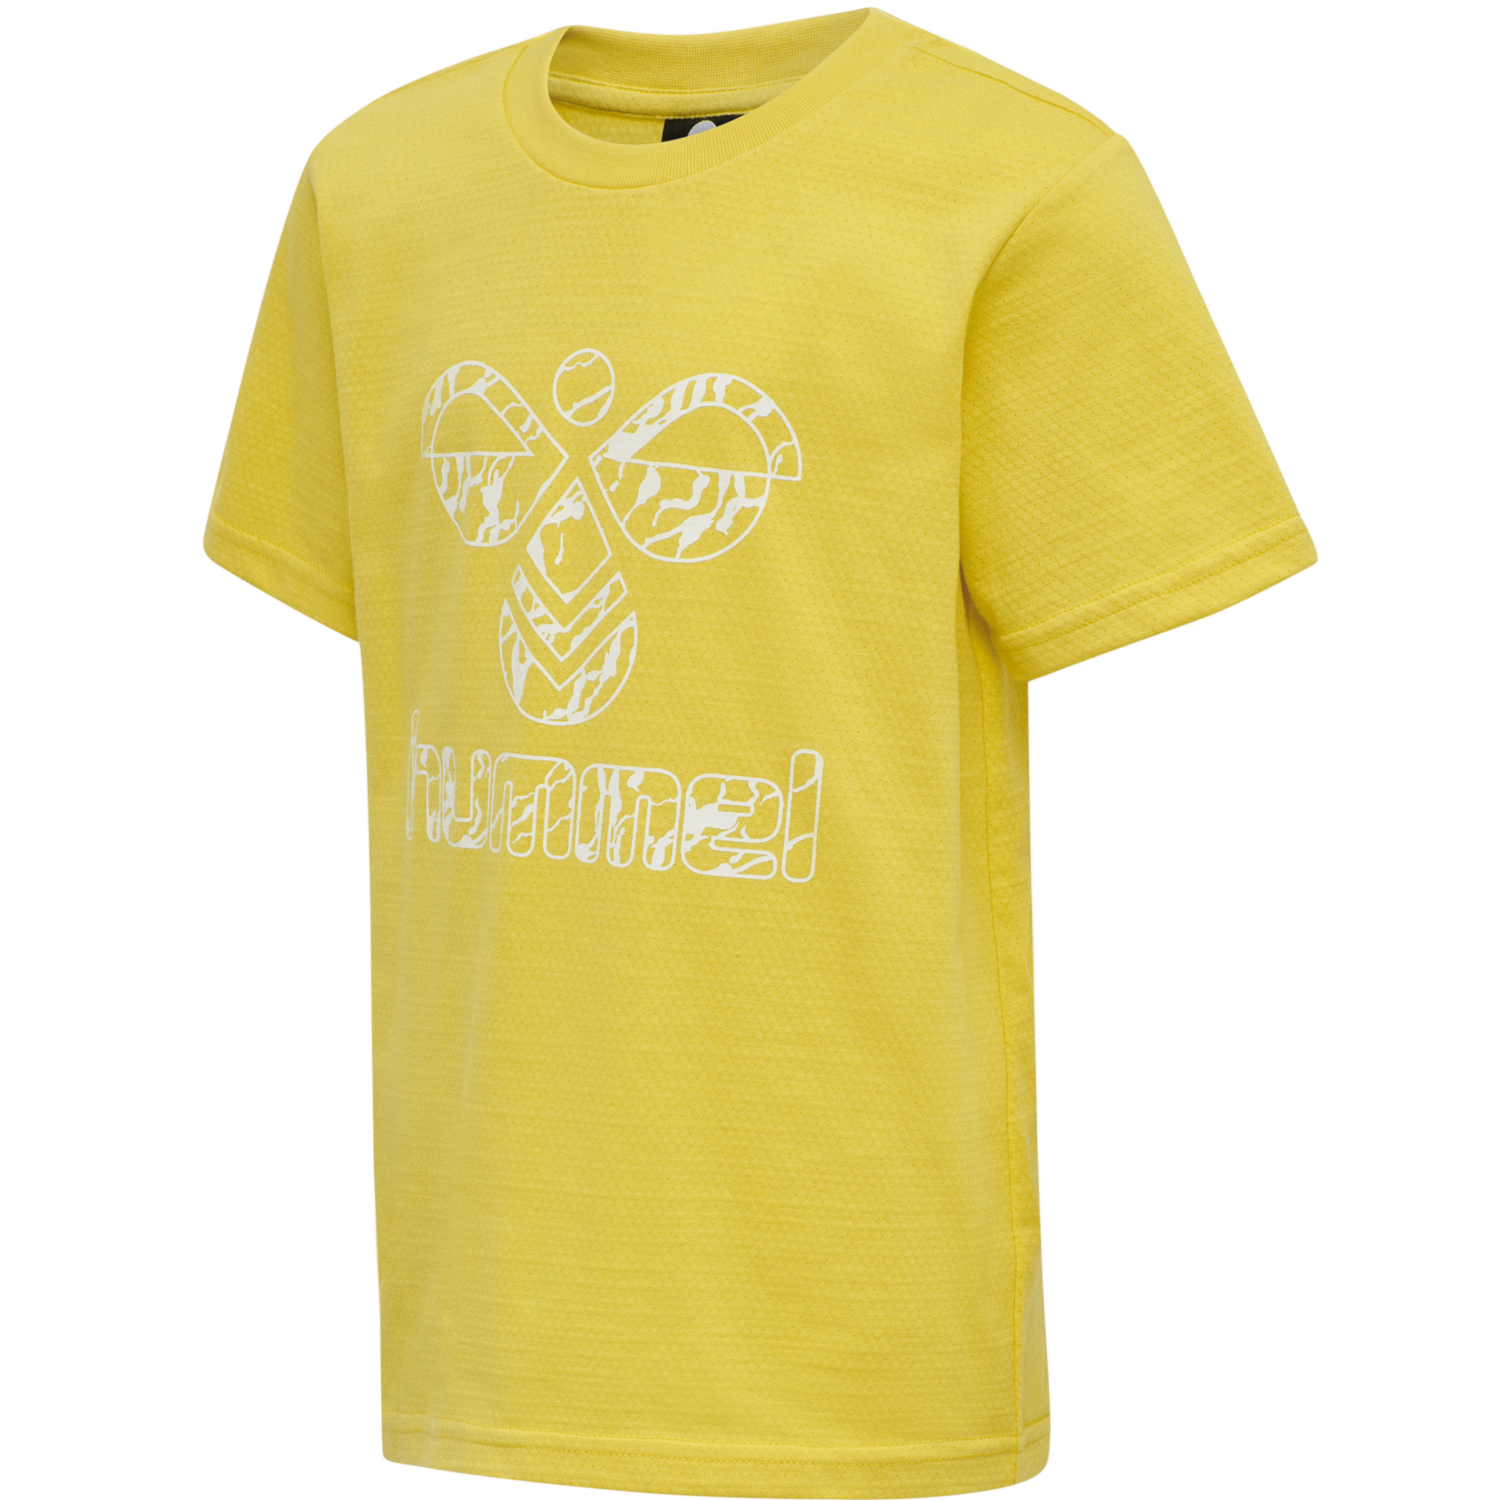 Fondo de imagen de PNG de camiseta amarilla impresa